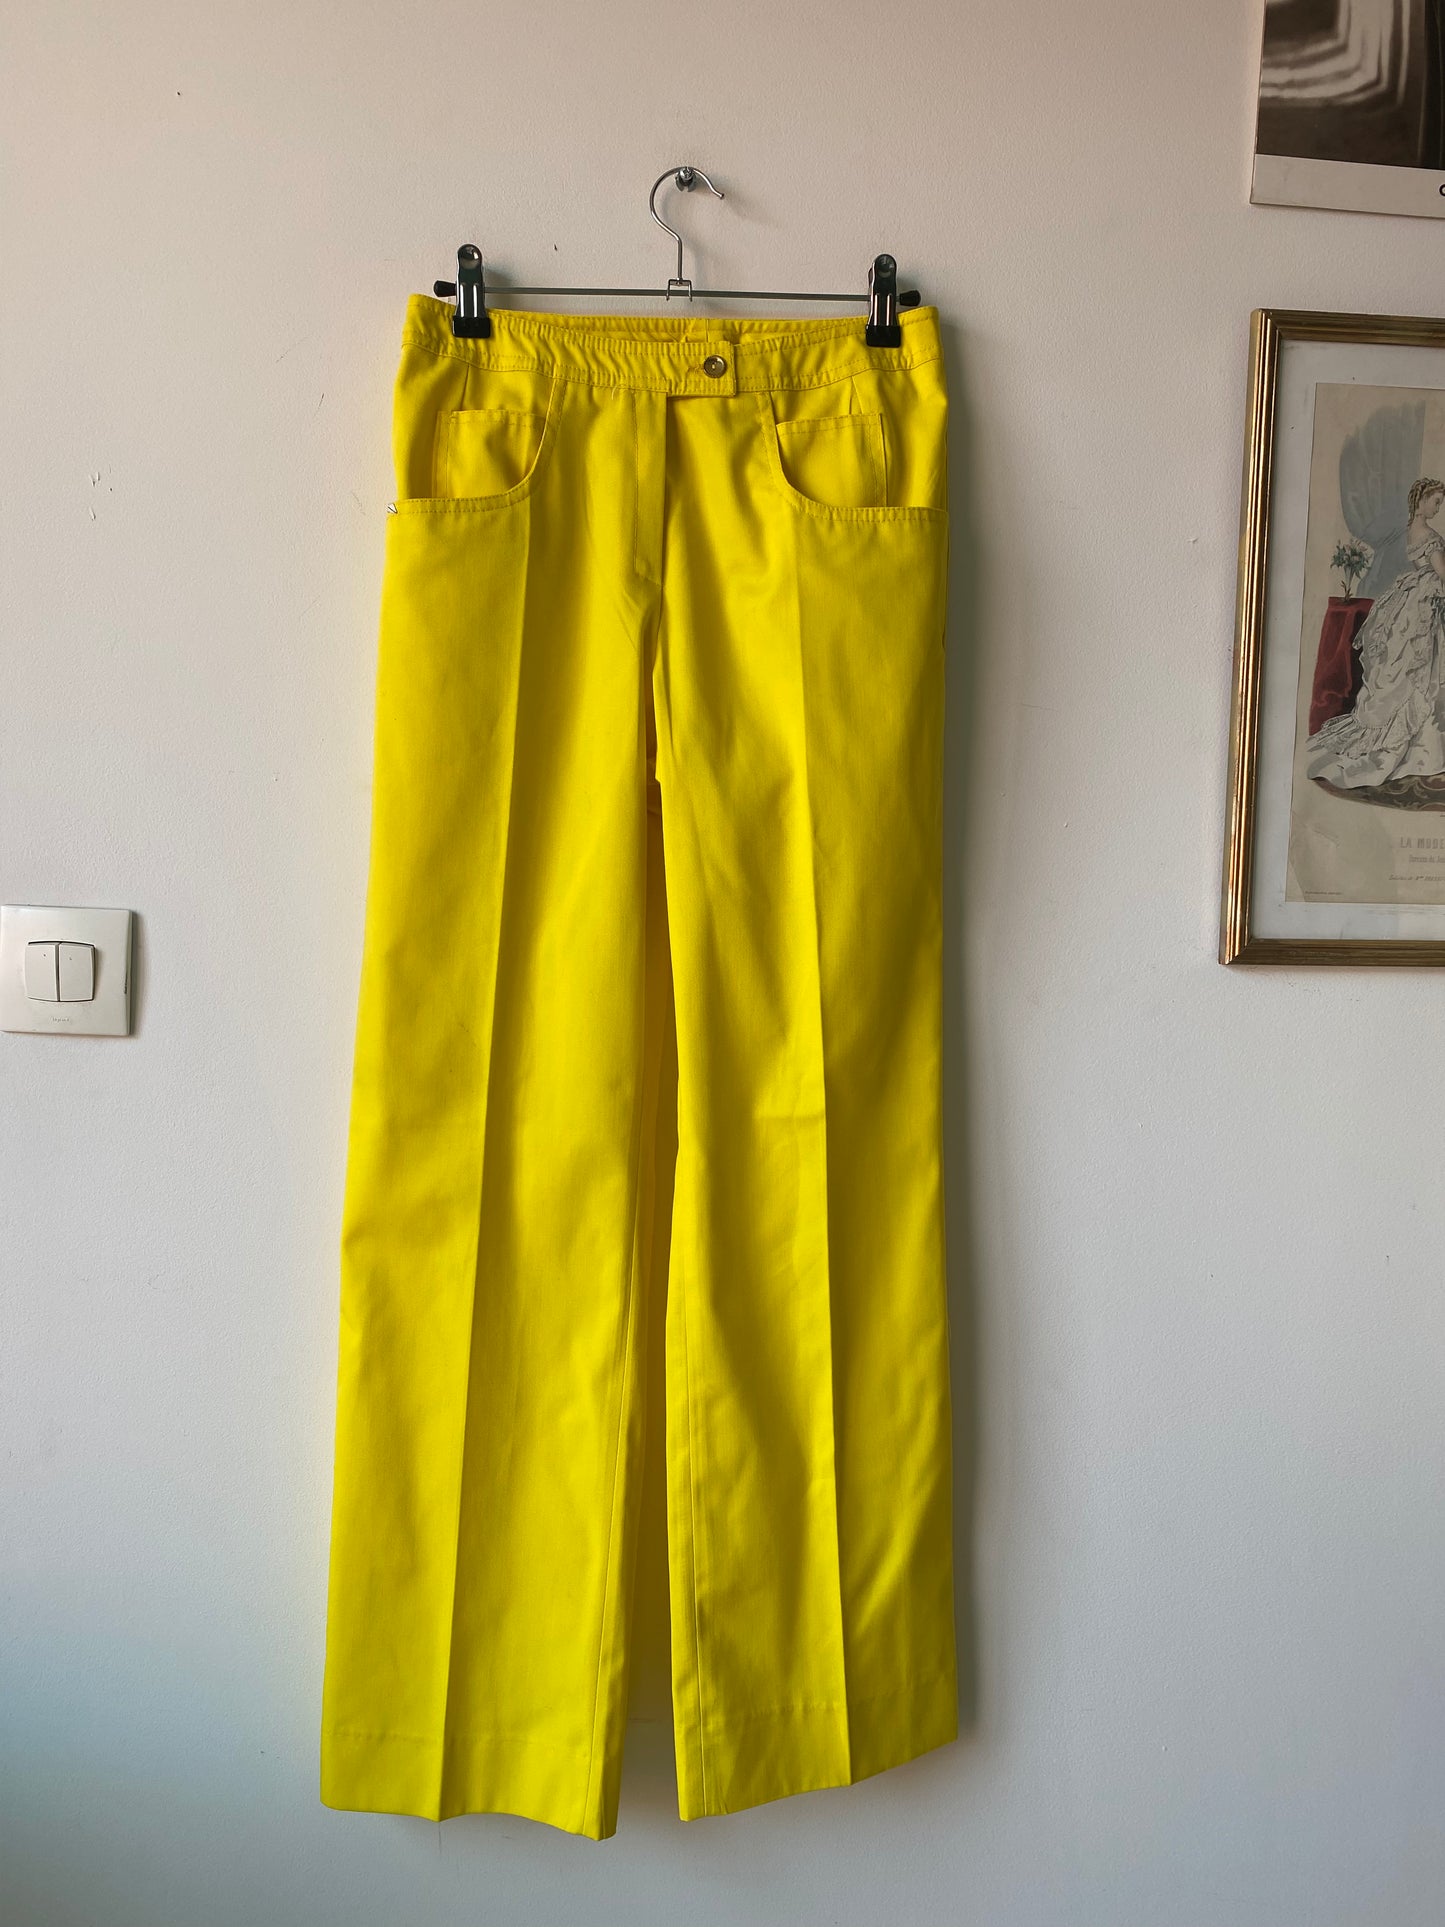 Pantalon jaune 70s